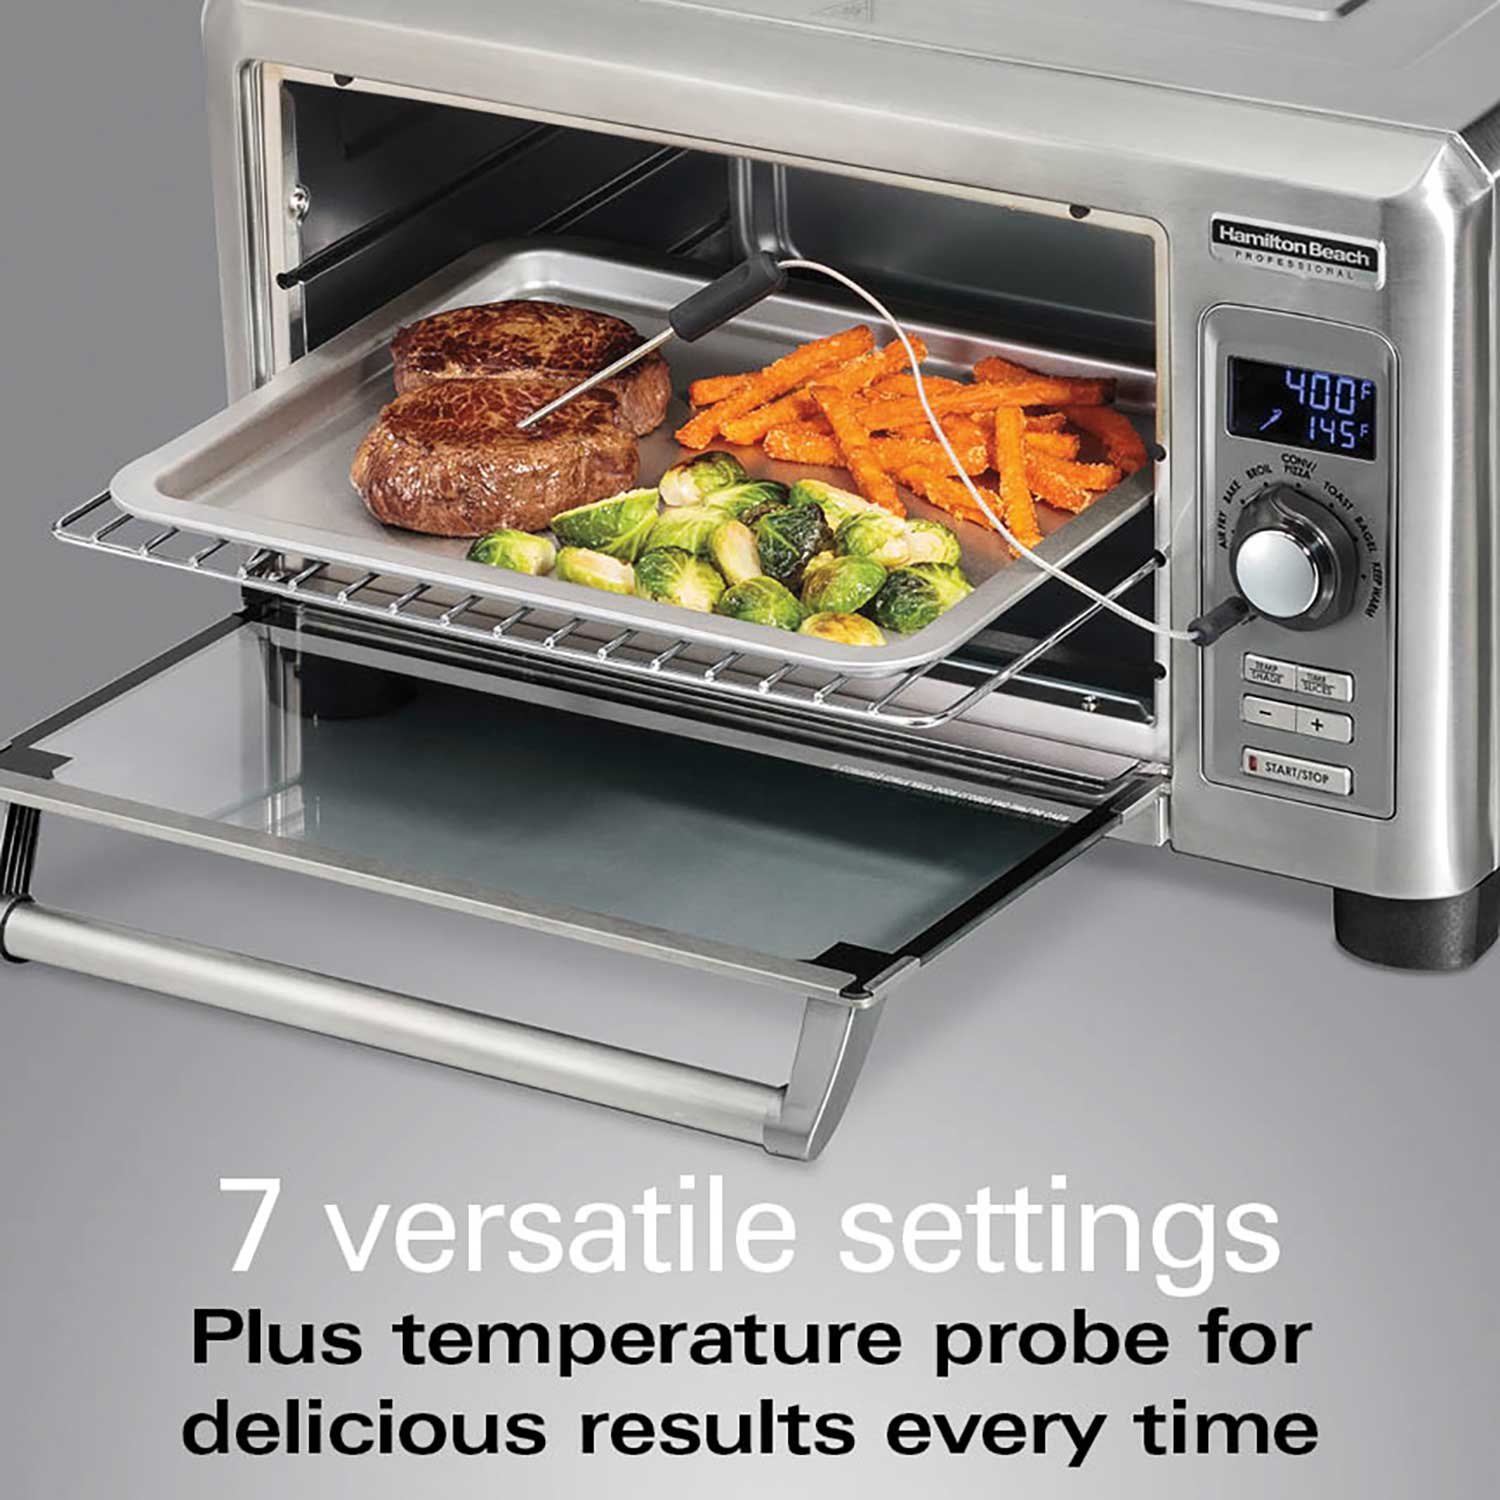 Hamilton Beach® Professional Sure-Crisp® Digital Air Fryer Countertop Oven